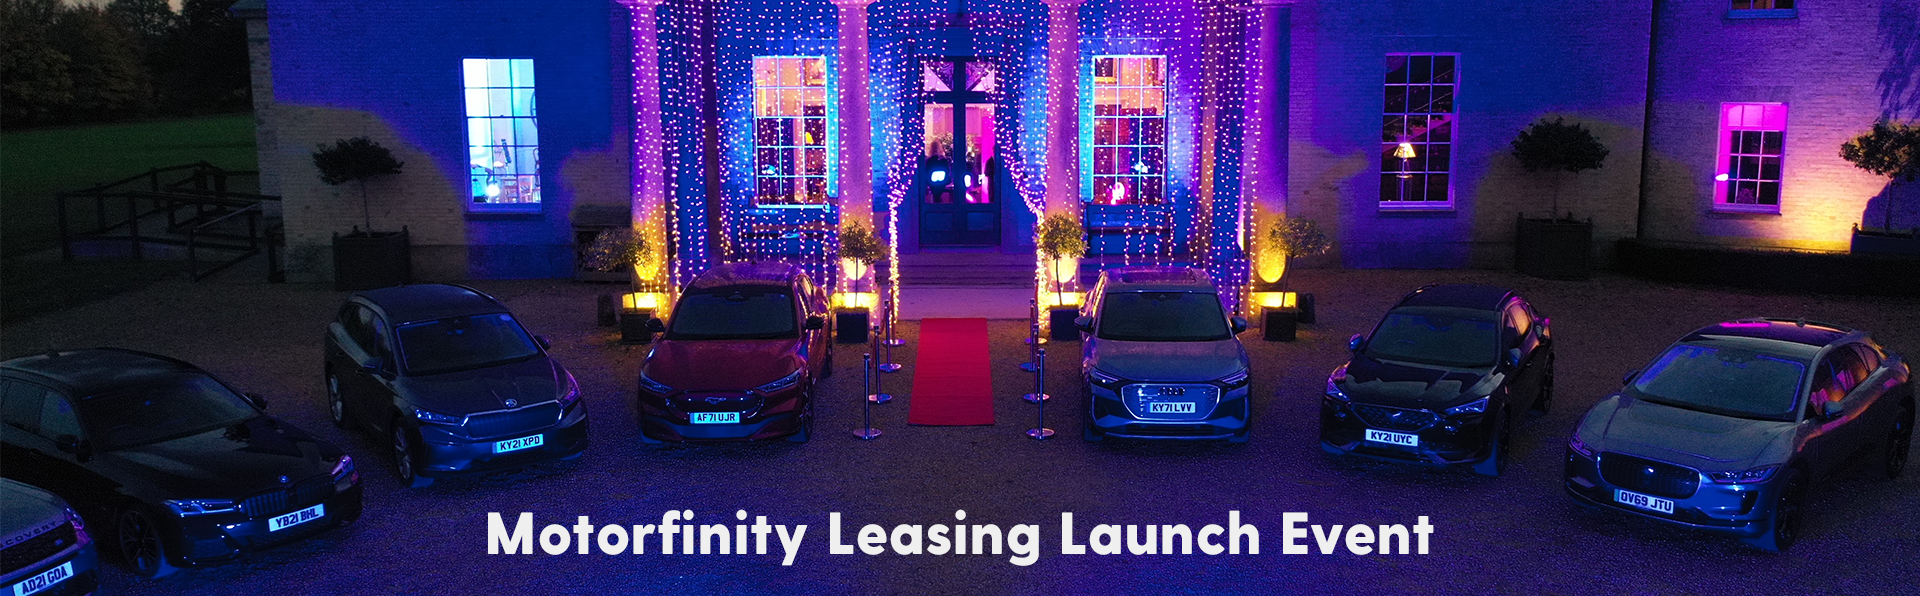 Motorfinity Leasing Launch Event 